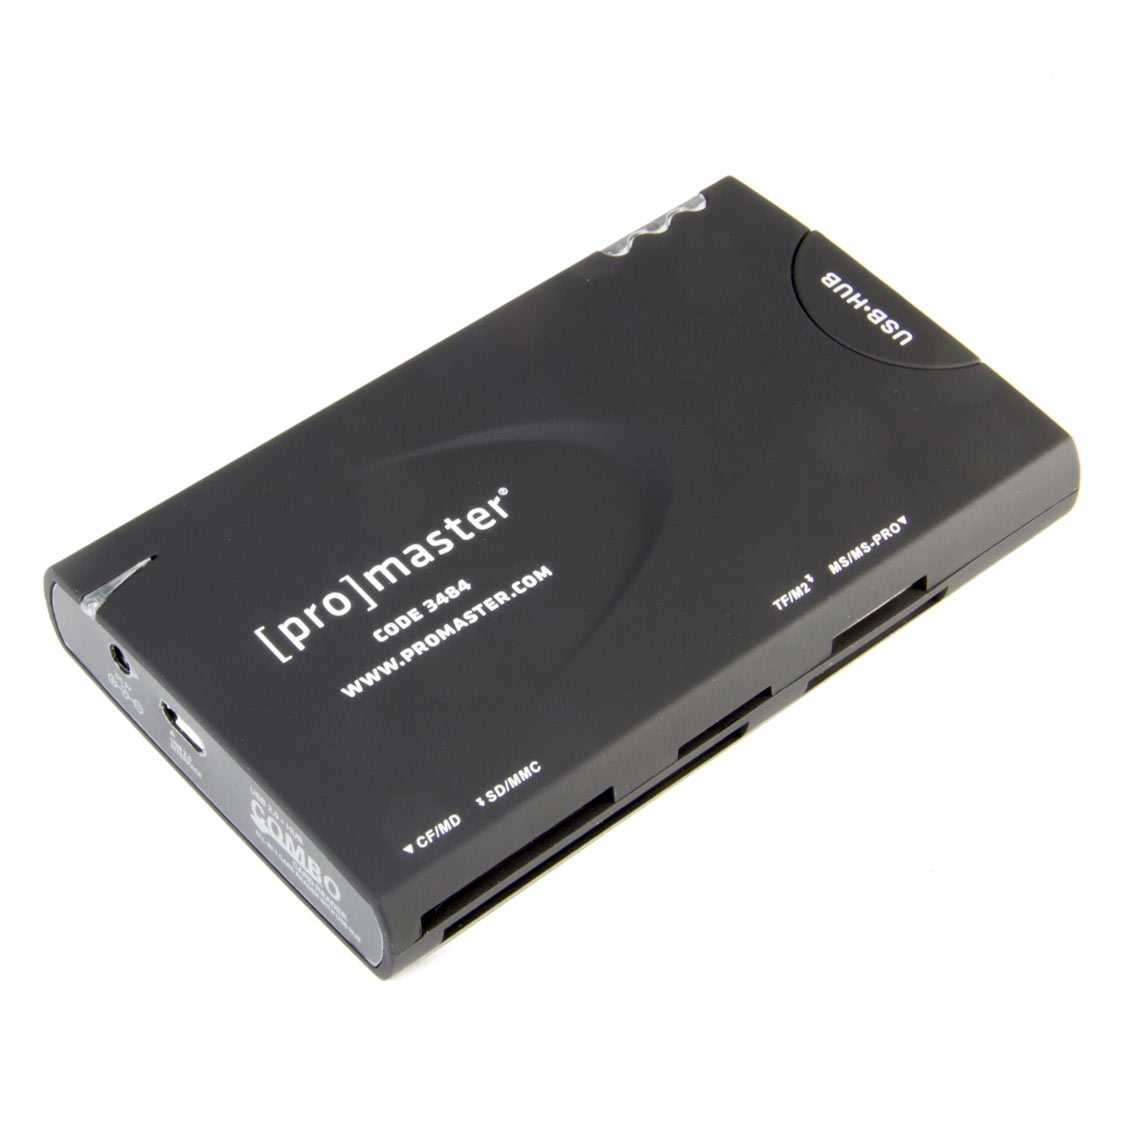 Promaster Universal Card Reader USB 2.0